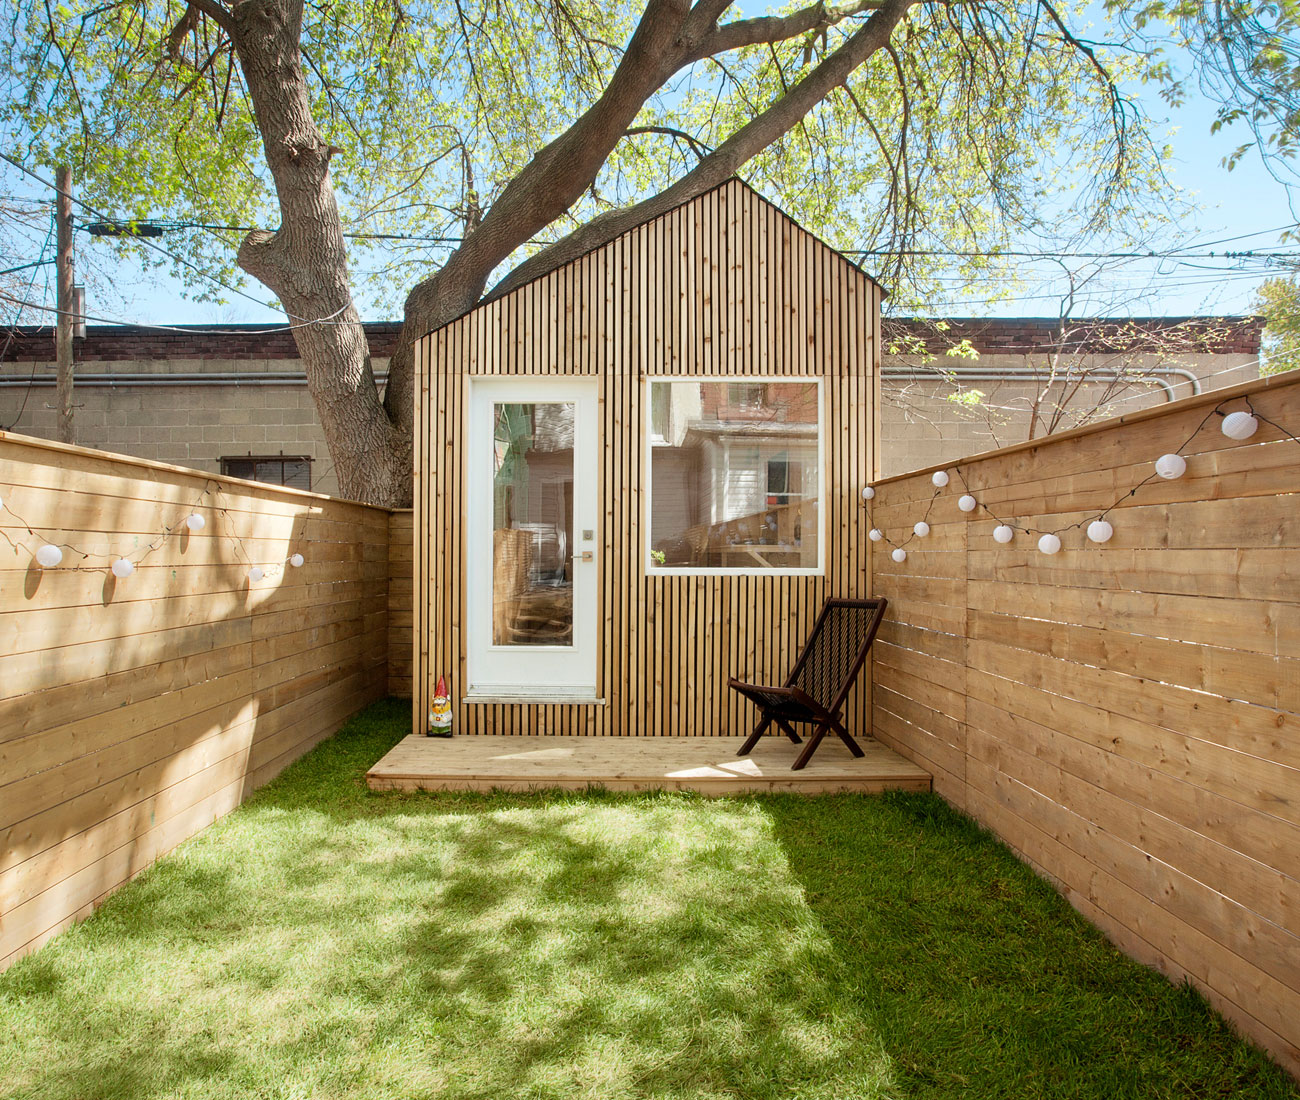 Garden Studio - Architect Oliver Dang - Six Four Five A - shed studio ideas